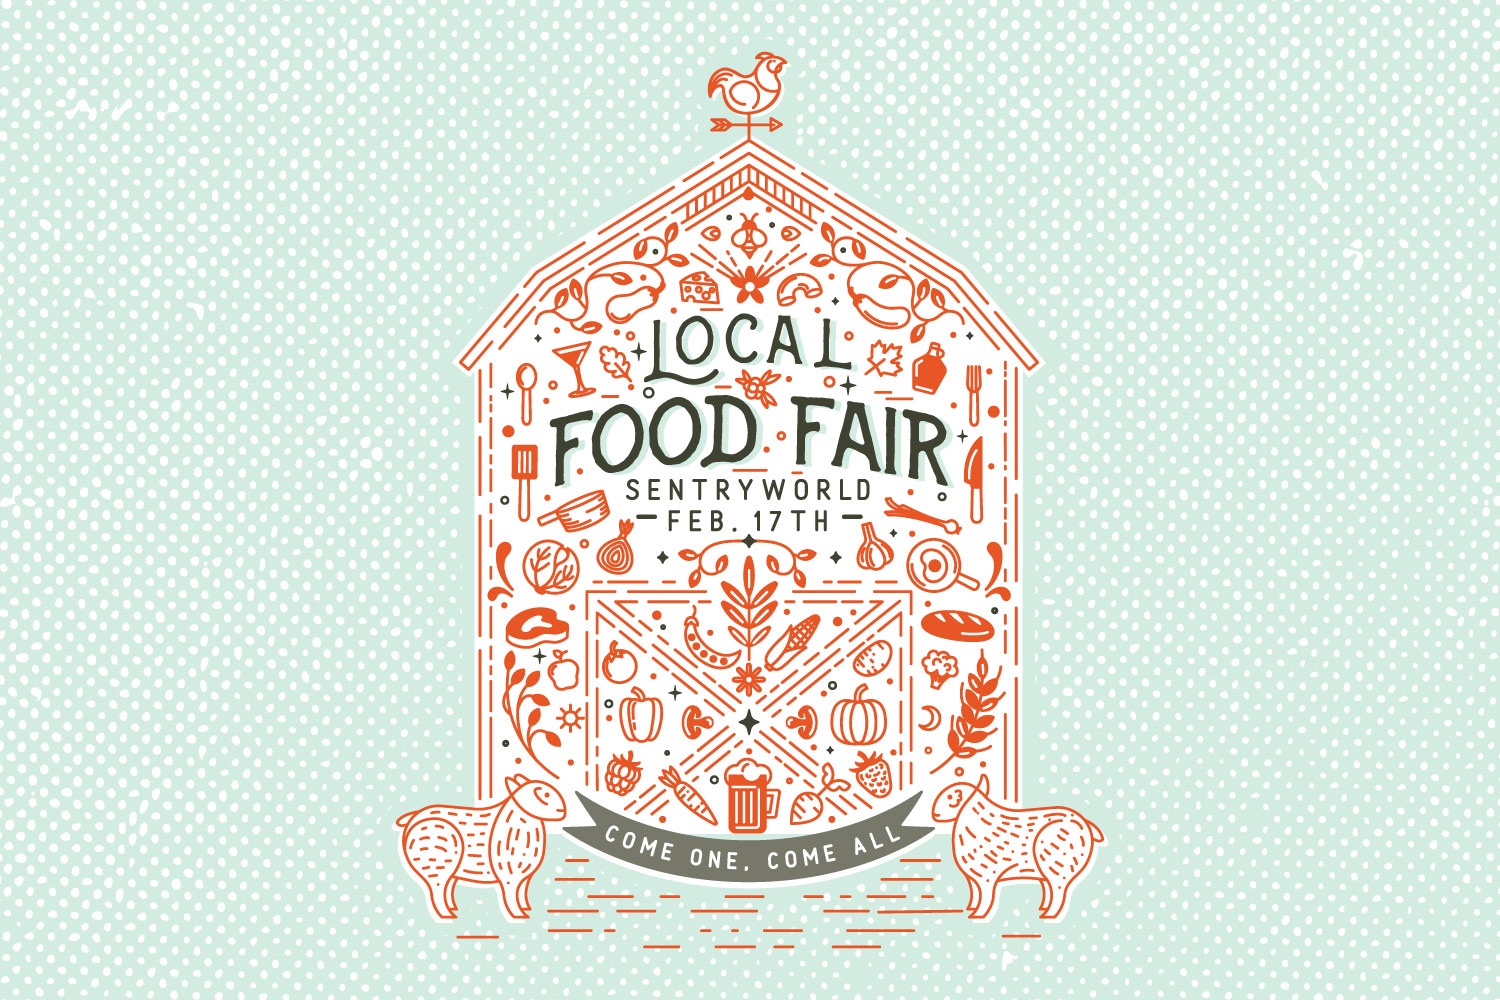 Local Food Fair - Sentry World - Feb. 17th - Come One. Come All.